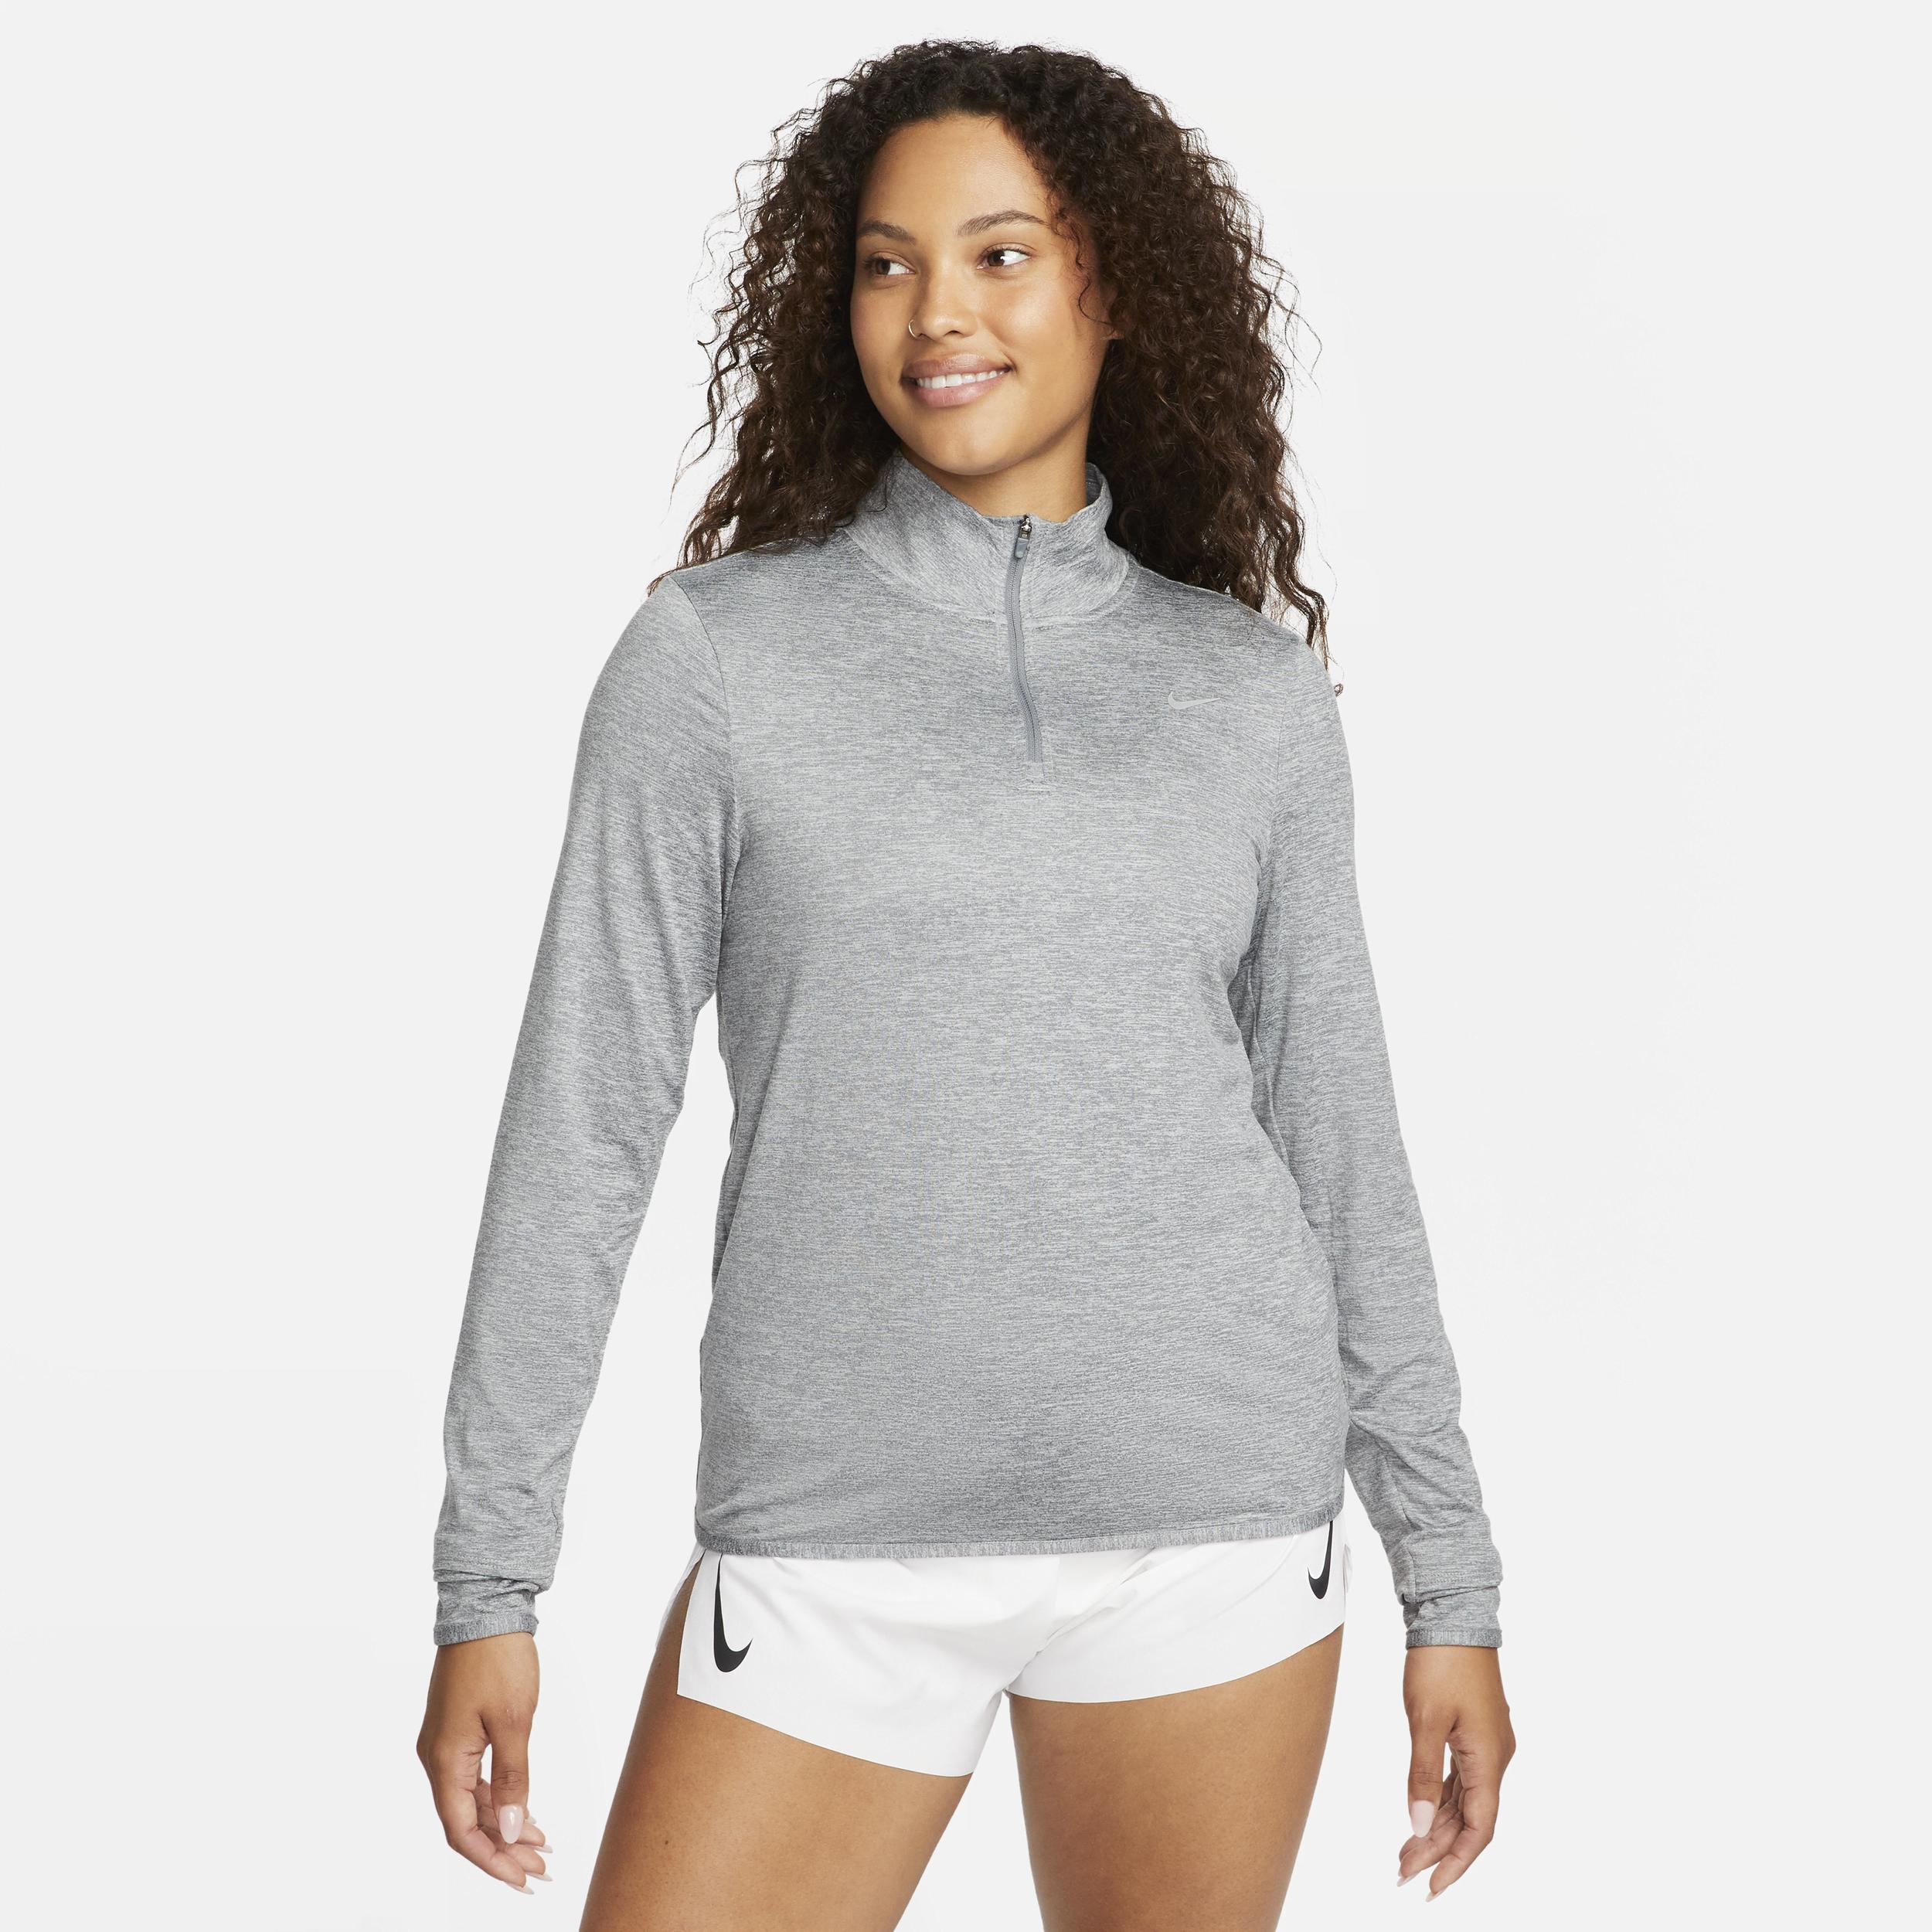 Nike Dri-fit Swift Uv 1/4-zip Running Top in Gray | Lyst